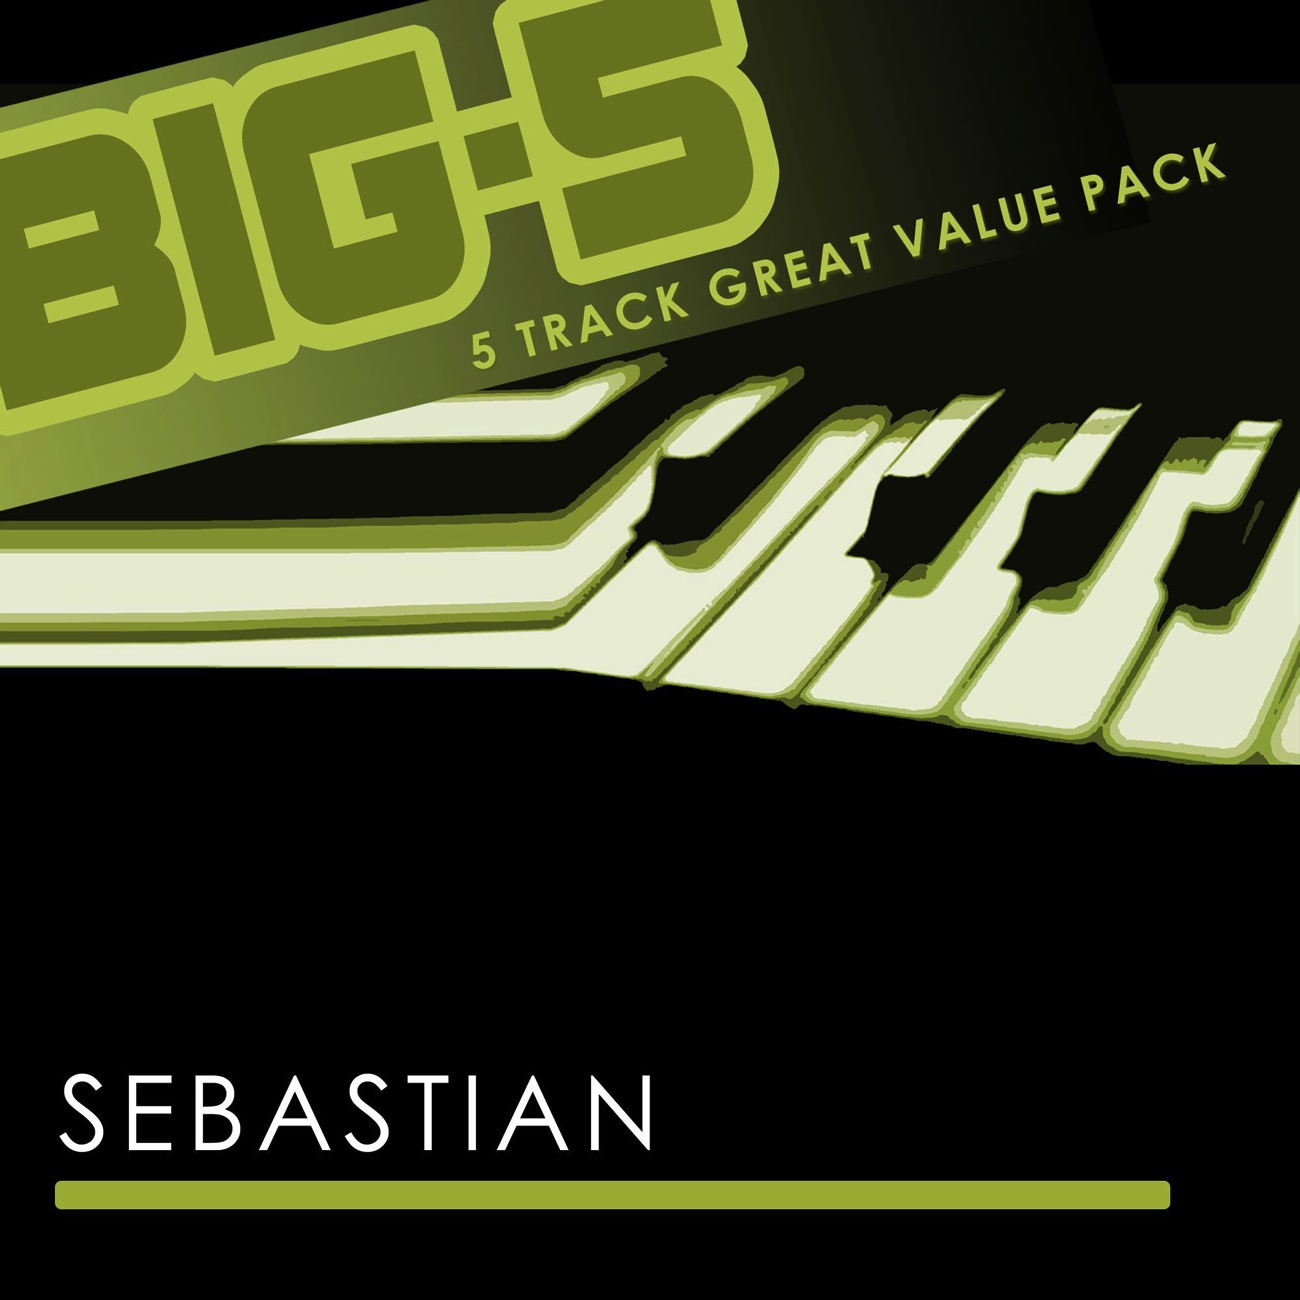 Big-5: Sebastian